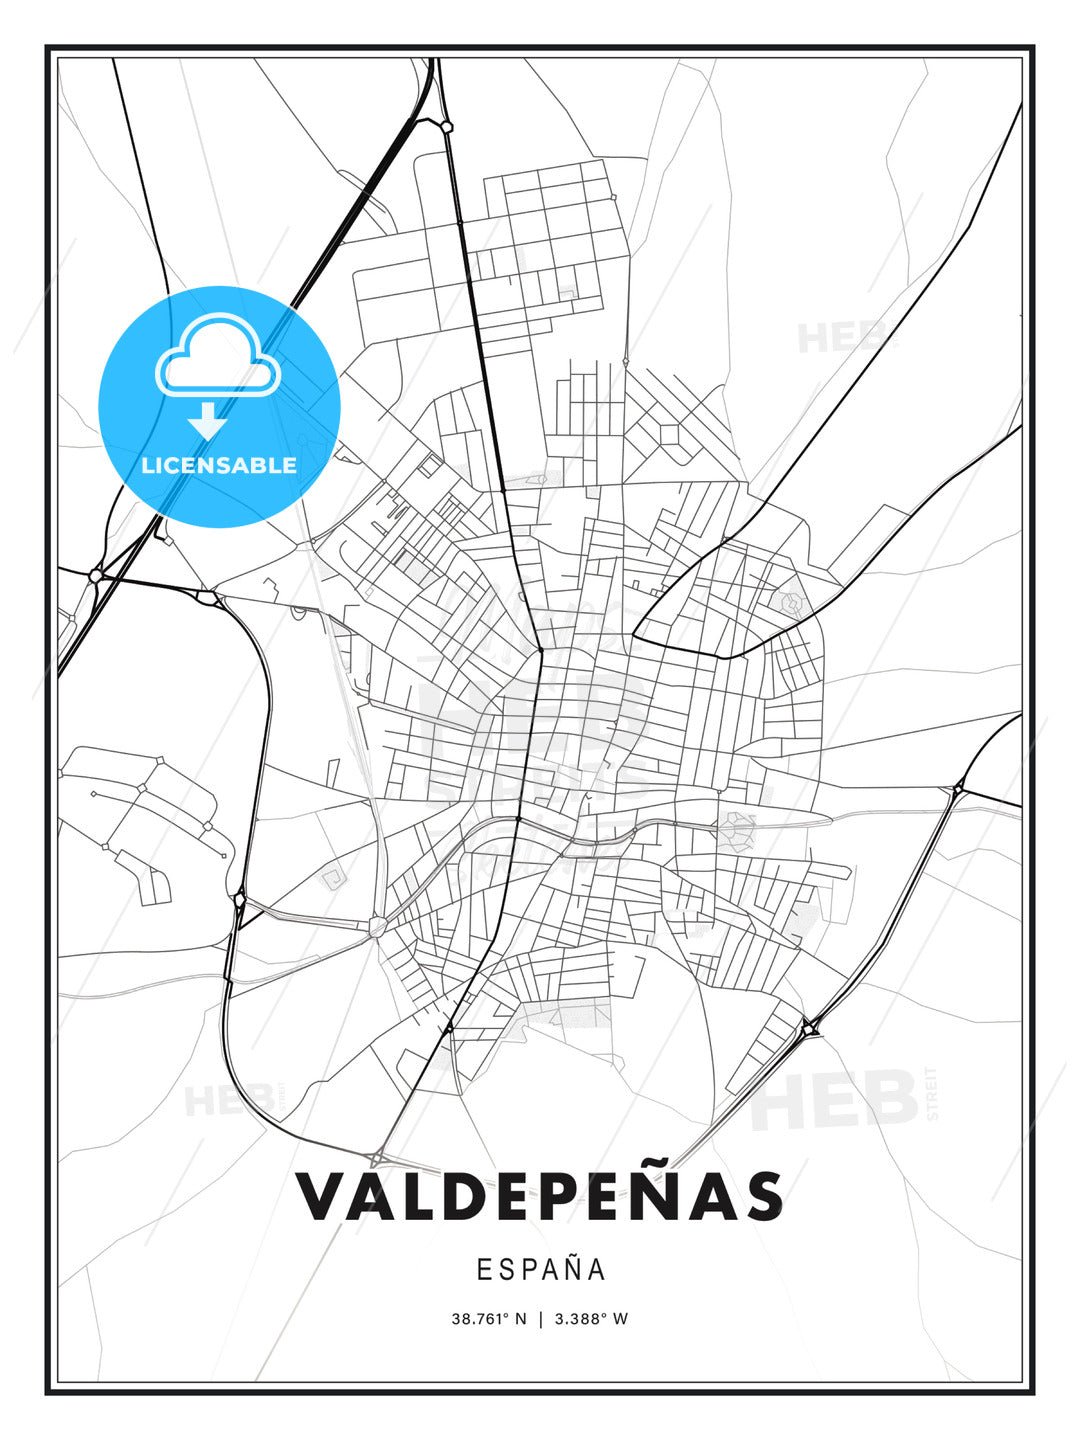 Valdepeñas, Spain, Modern Print Template in Various Formats - HEBSTREITS Sketches